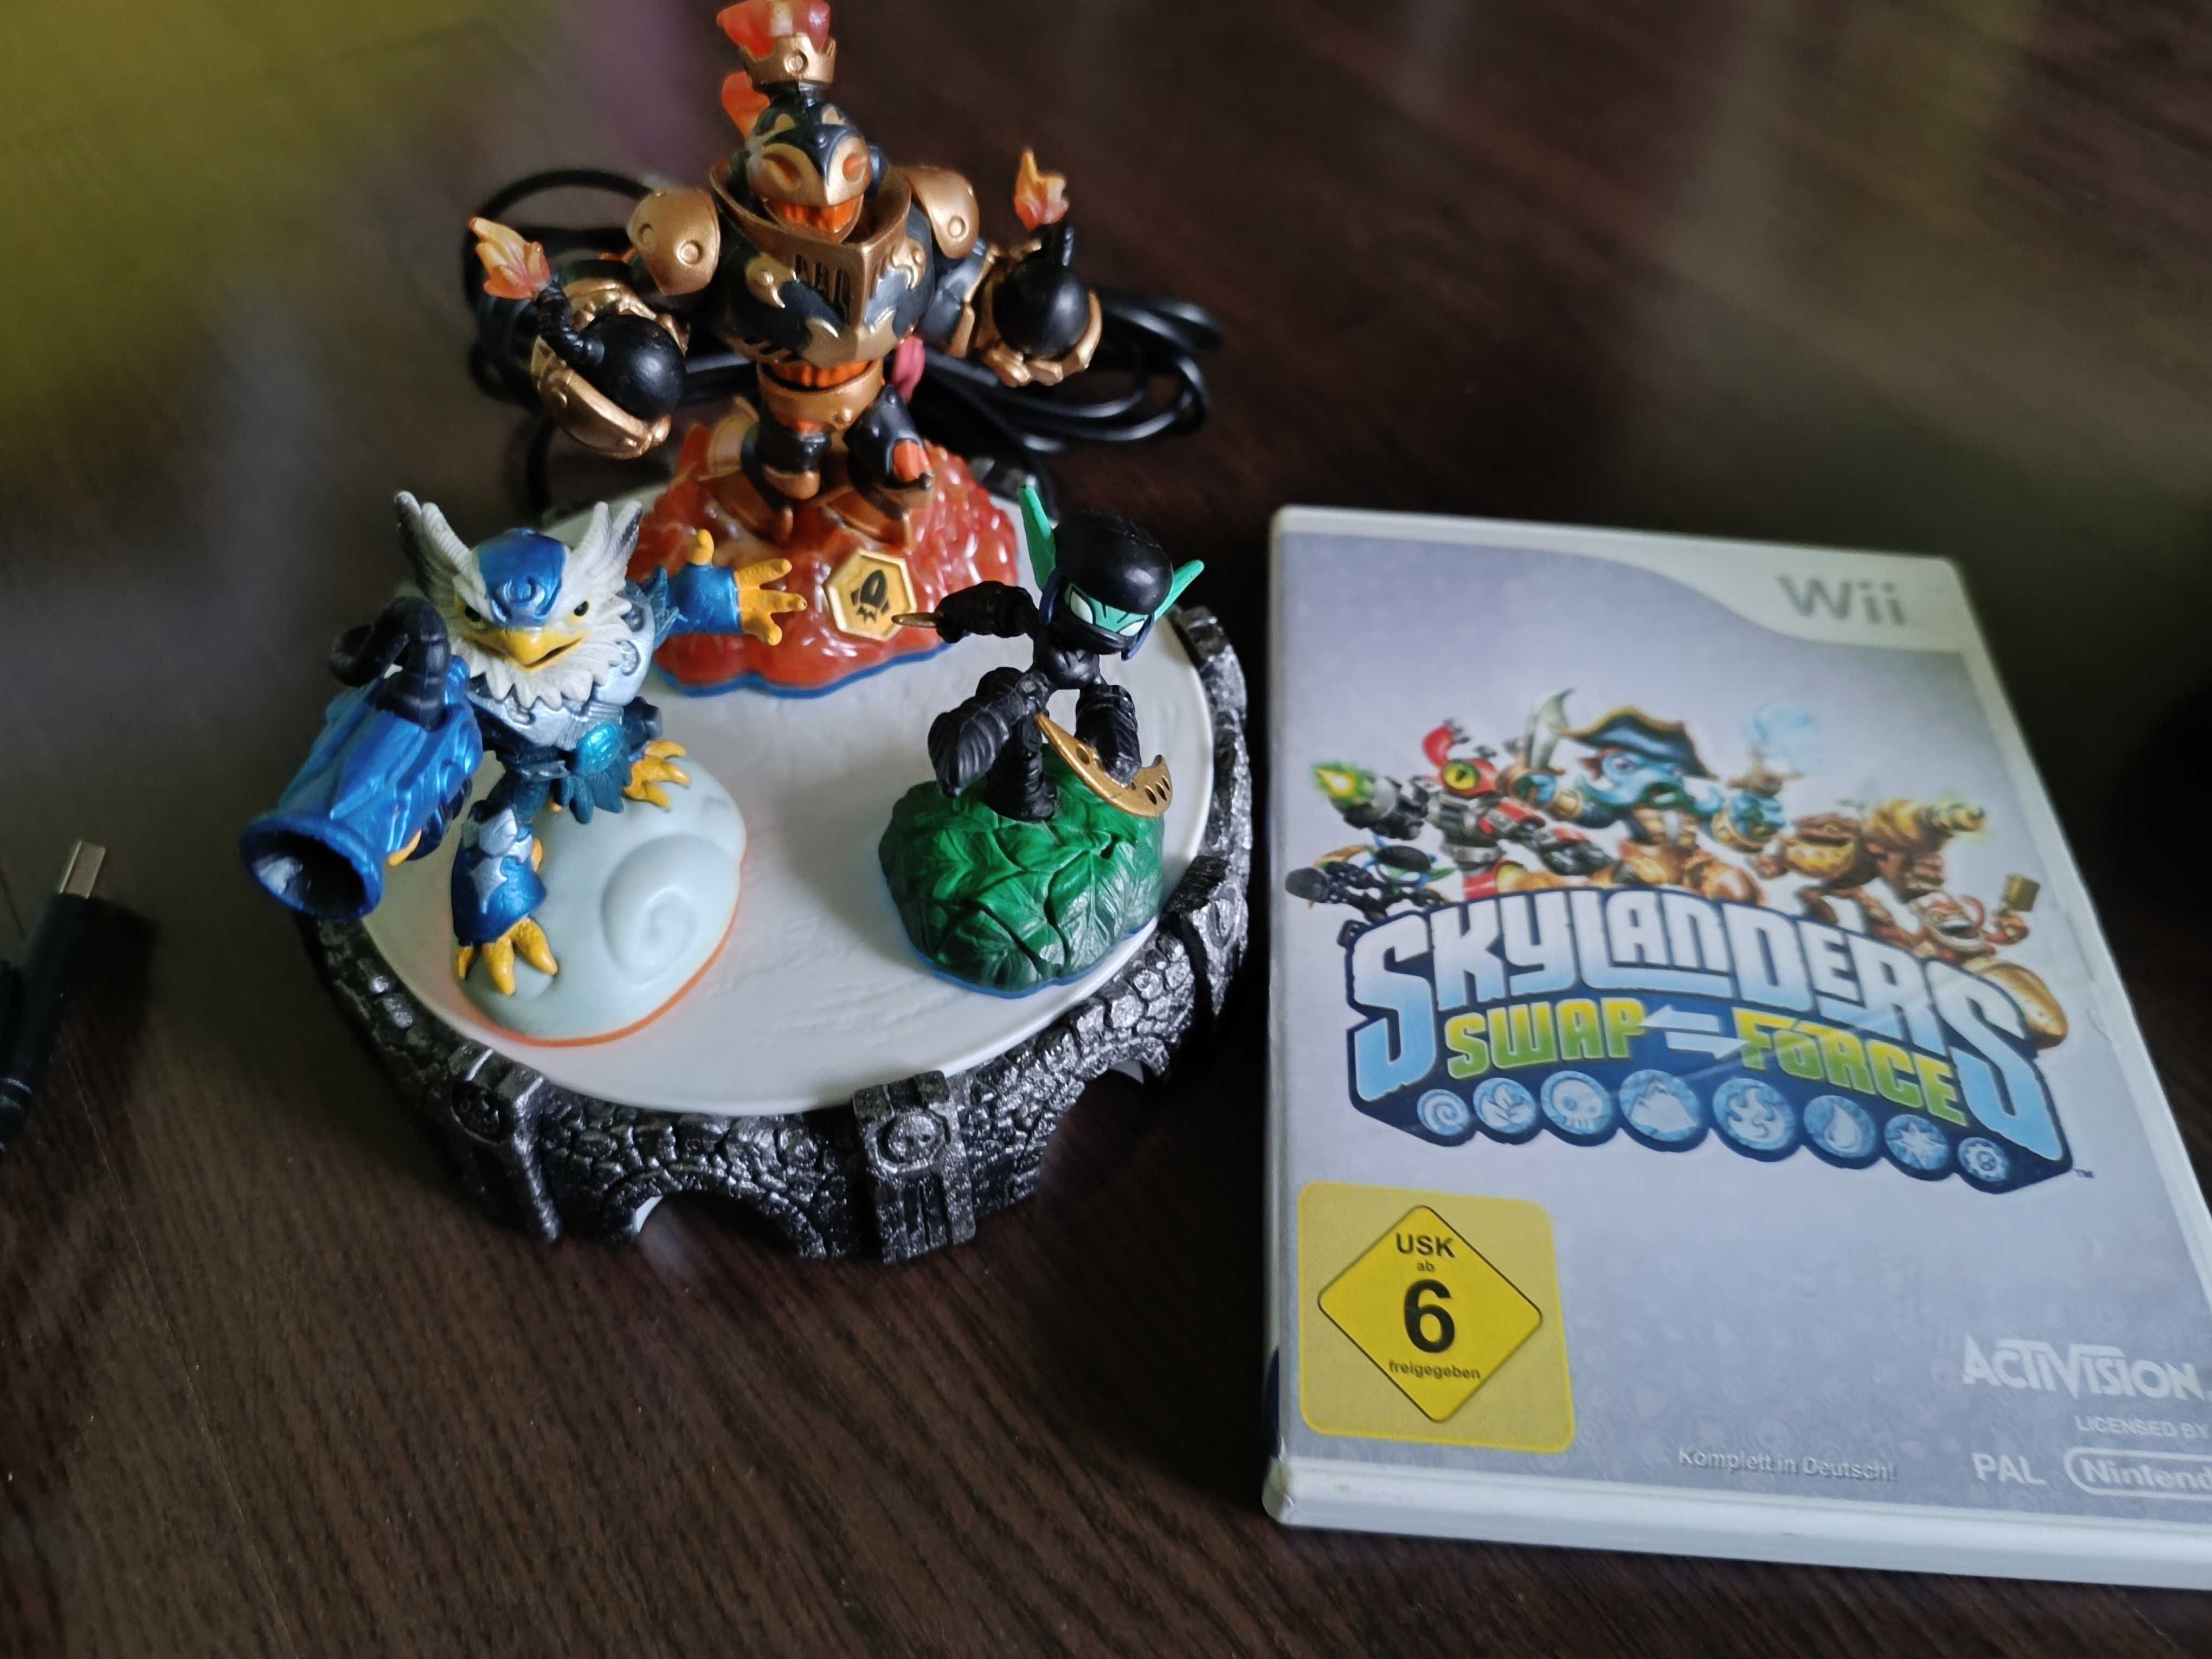 Wii WiiU Disney Infinity Skylanders sturi complete joc portal figurine